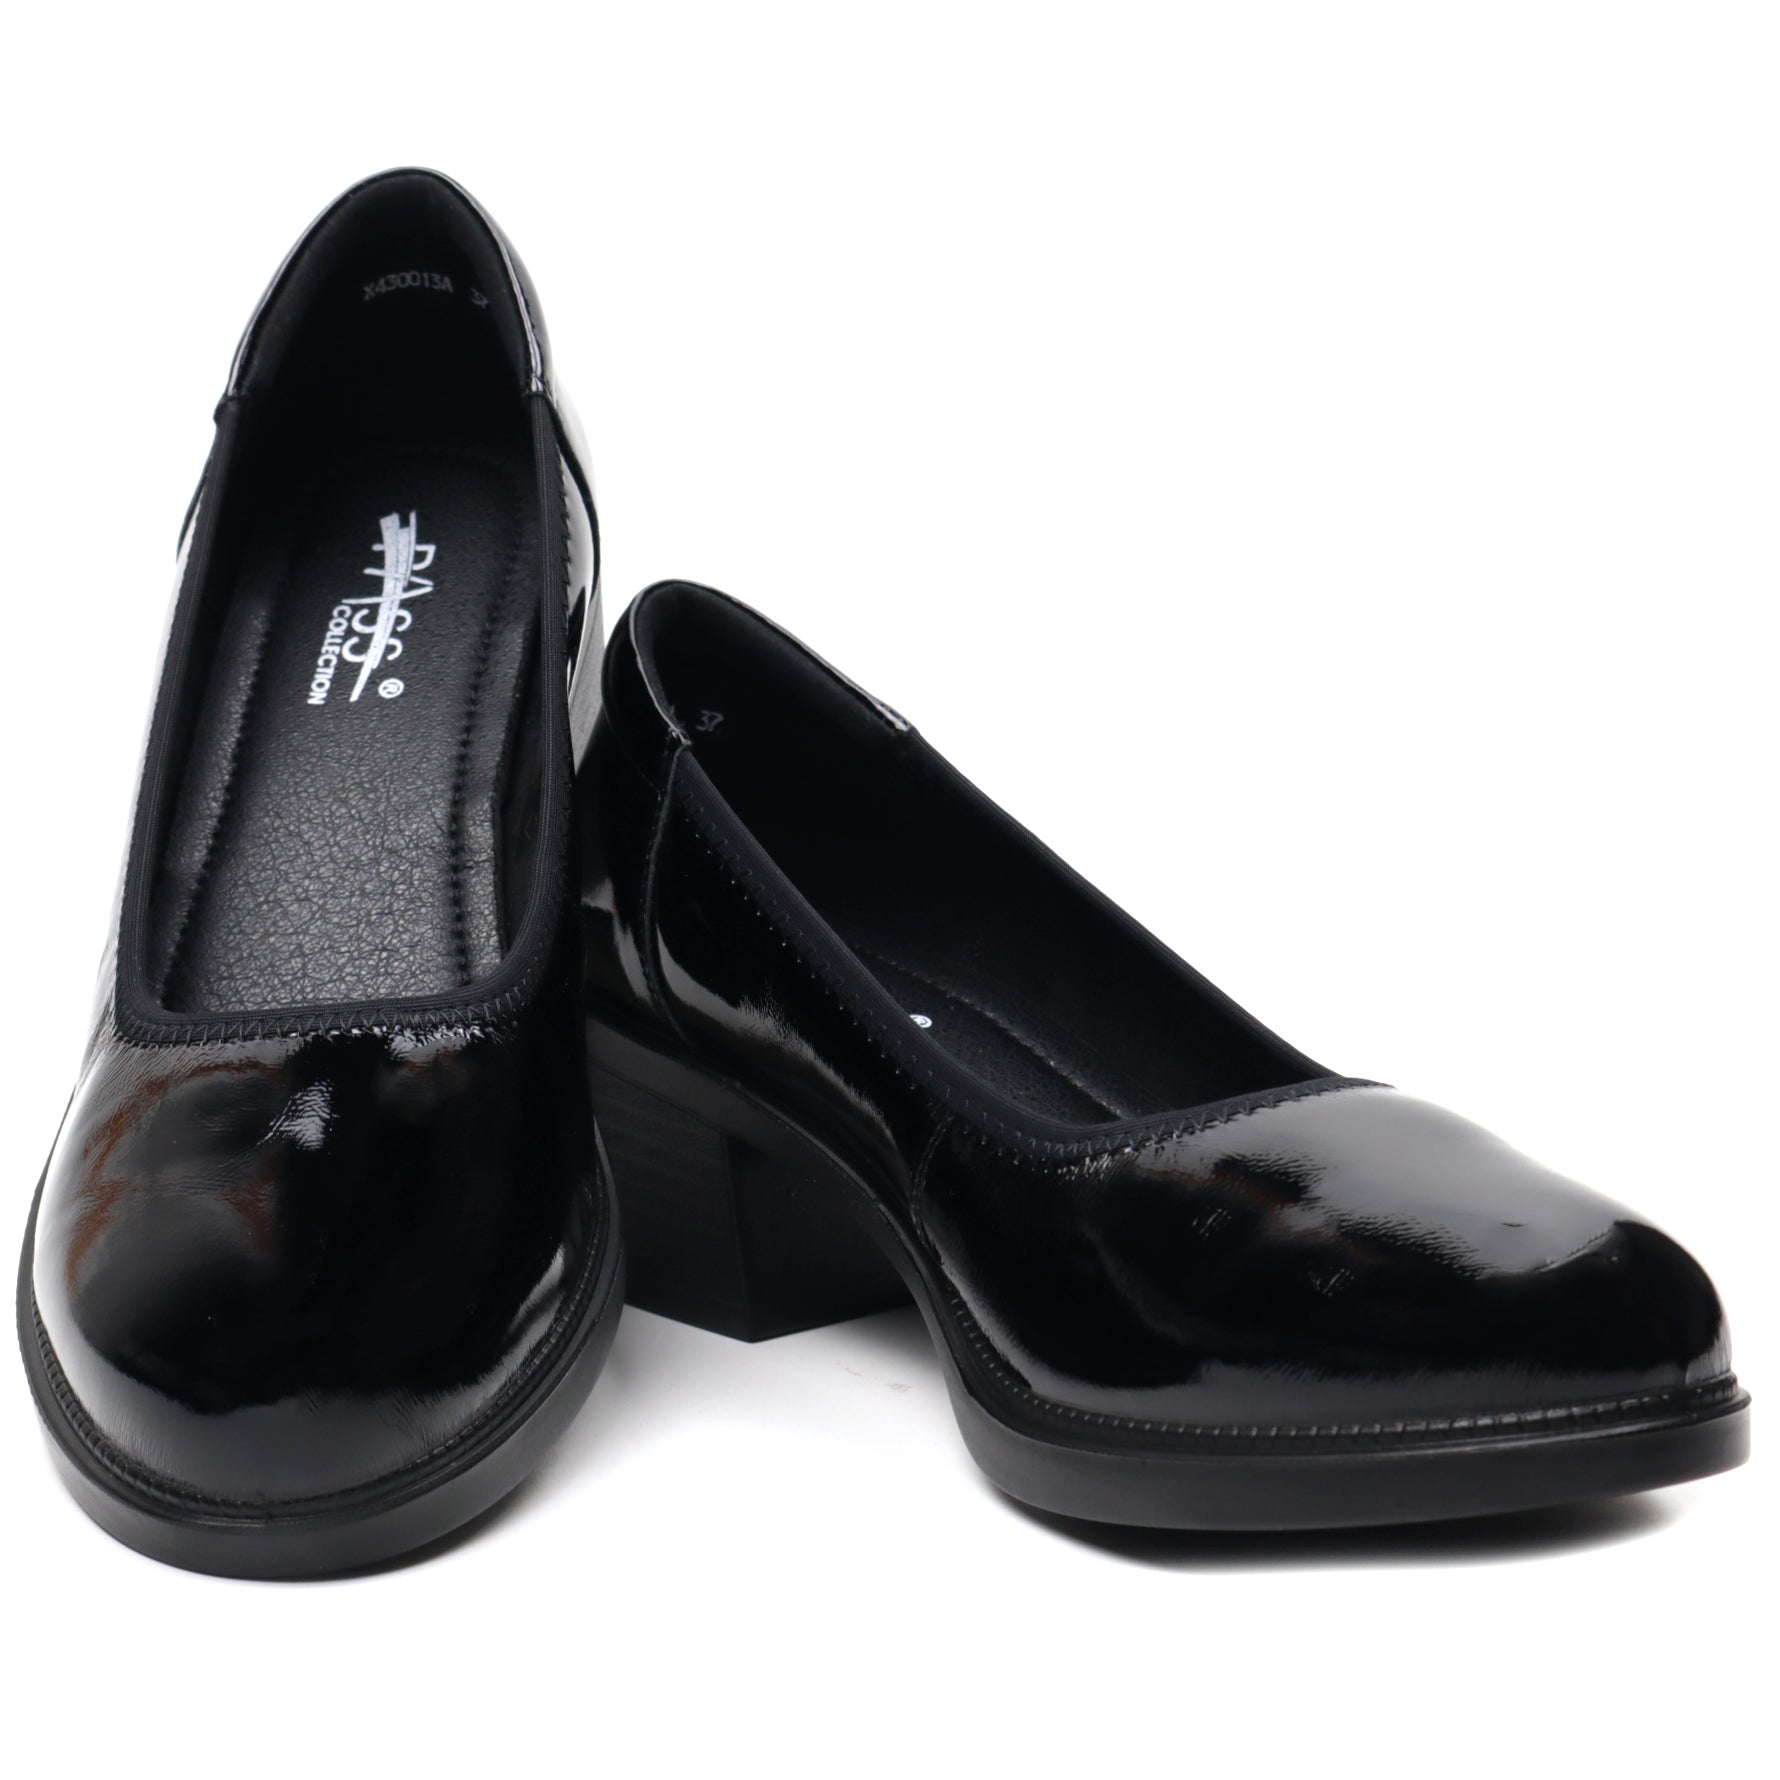 Pass Collection Pantofi dama  X4X430013A 01 negru lac ID3591-NGL